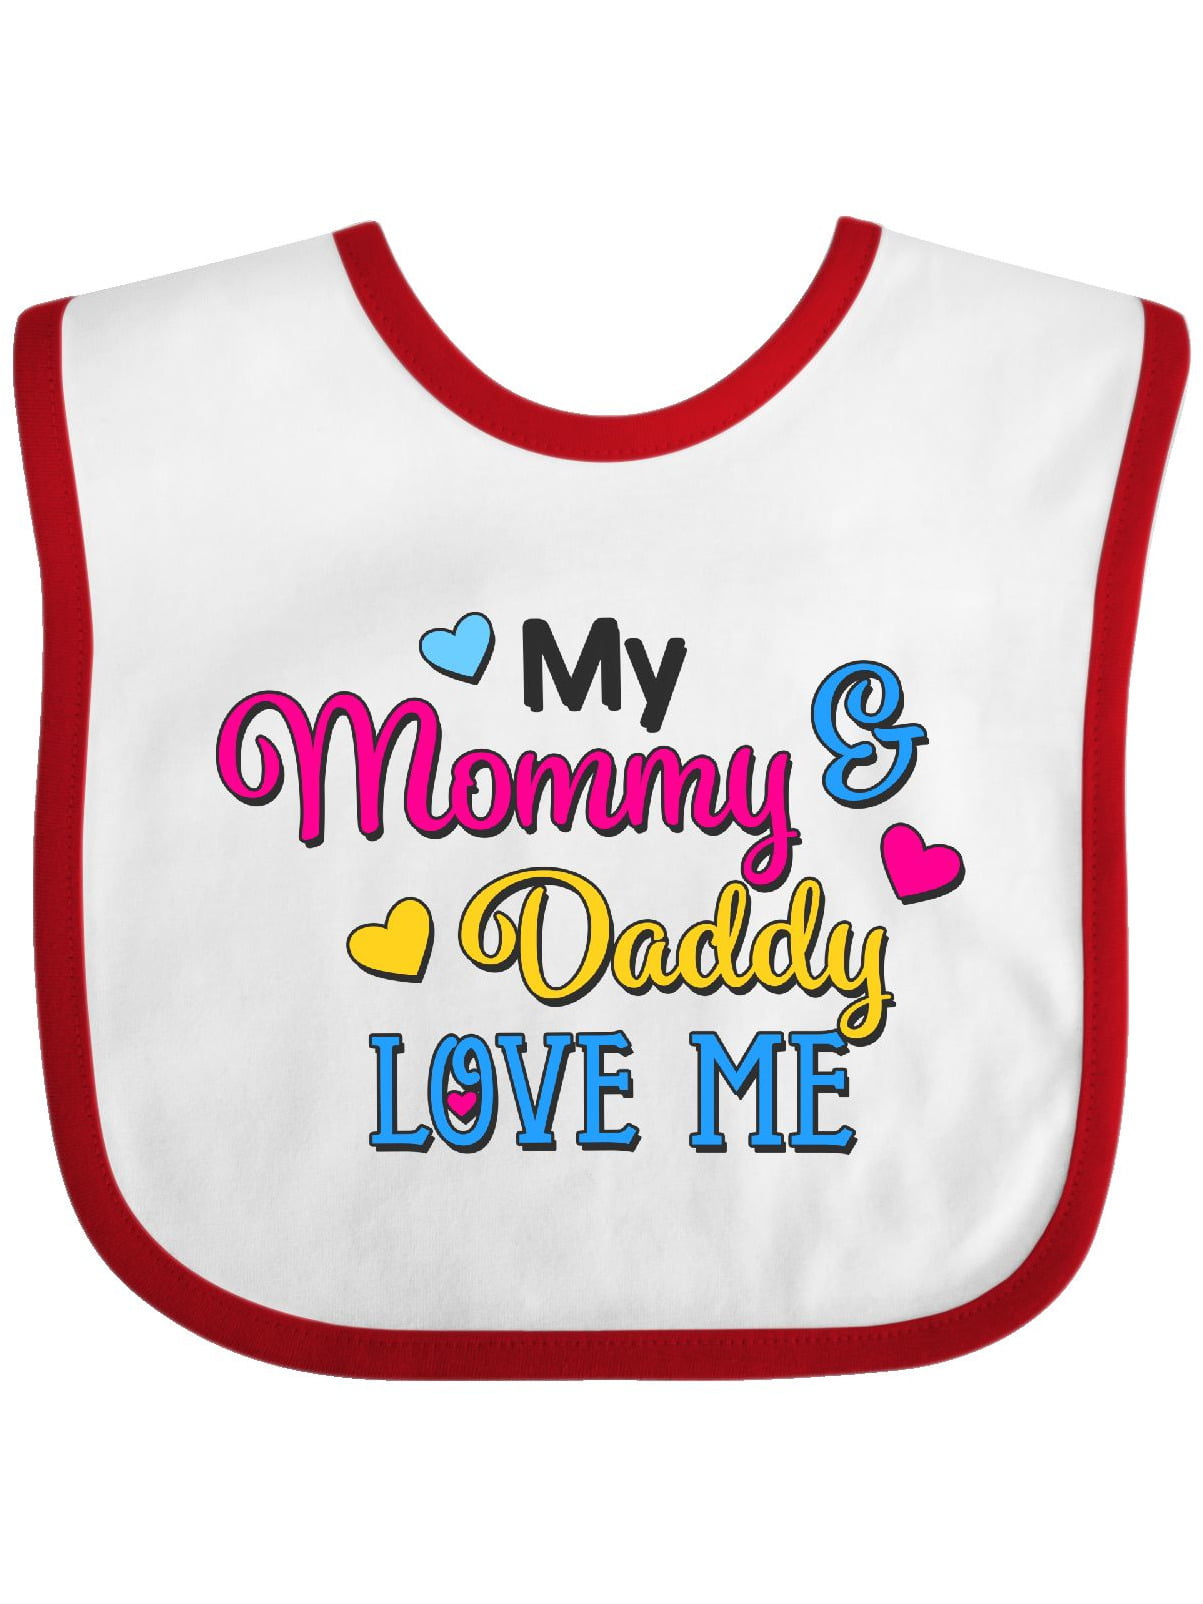 My Mommy and Daddy Love me with Hearts Baby Bib - Walmart.com - Walmart.com